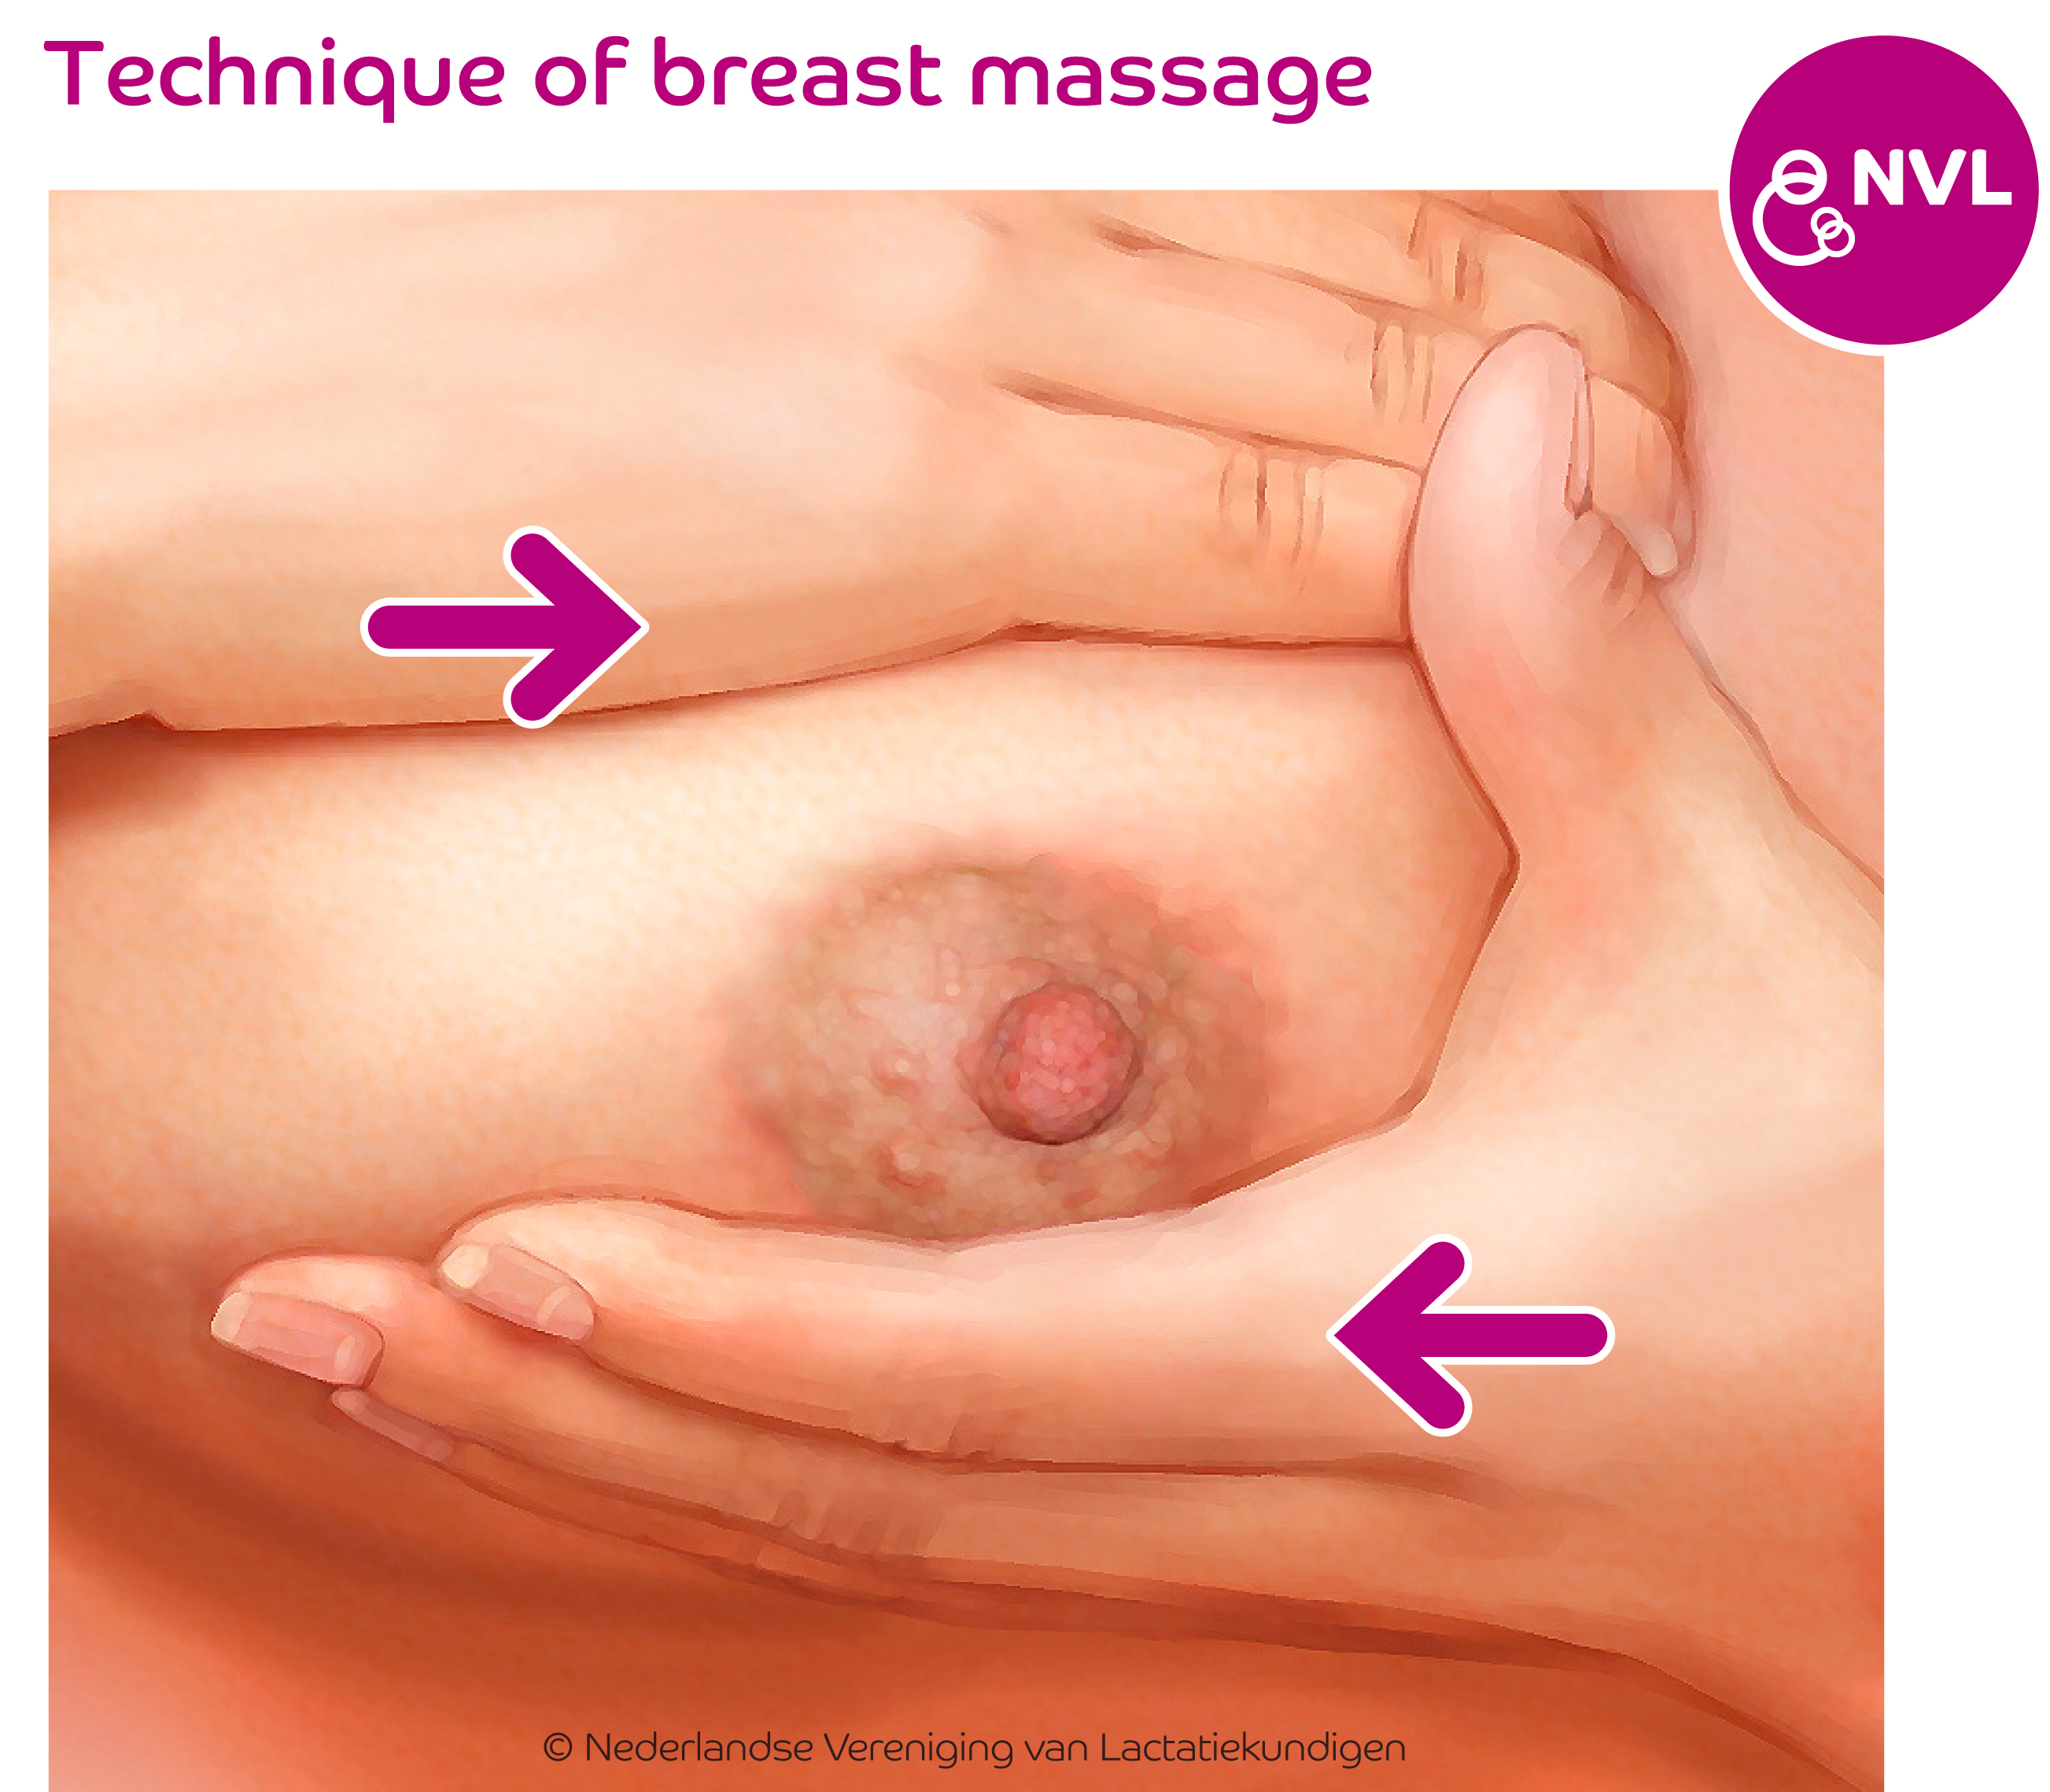 Breastmassage step 4 | NVL